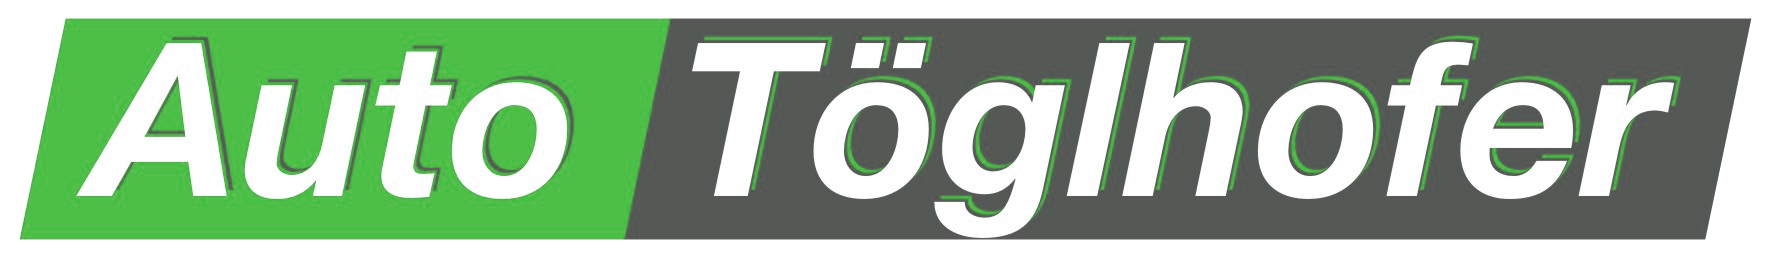 Auto_Toeglhofer_02_green